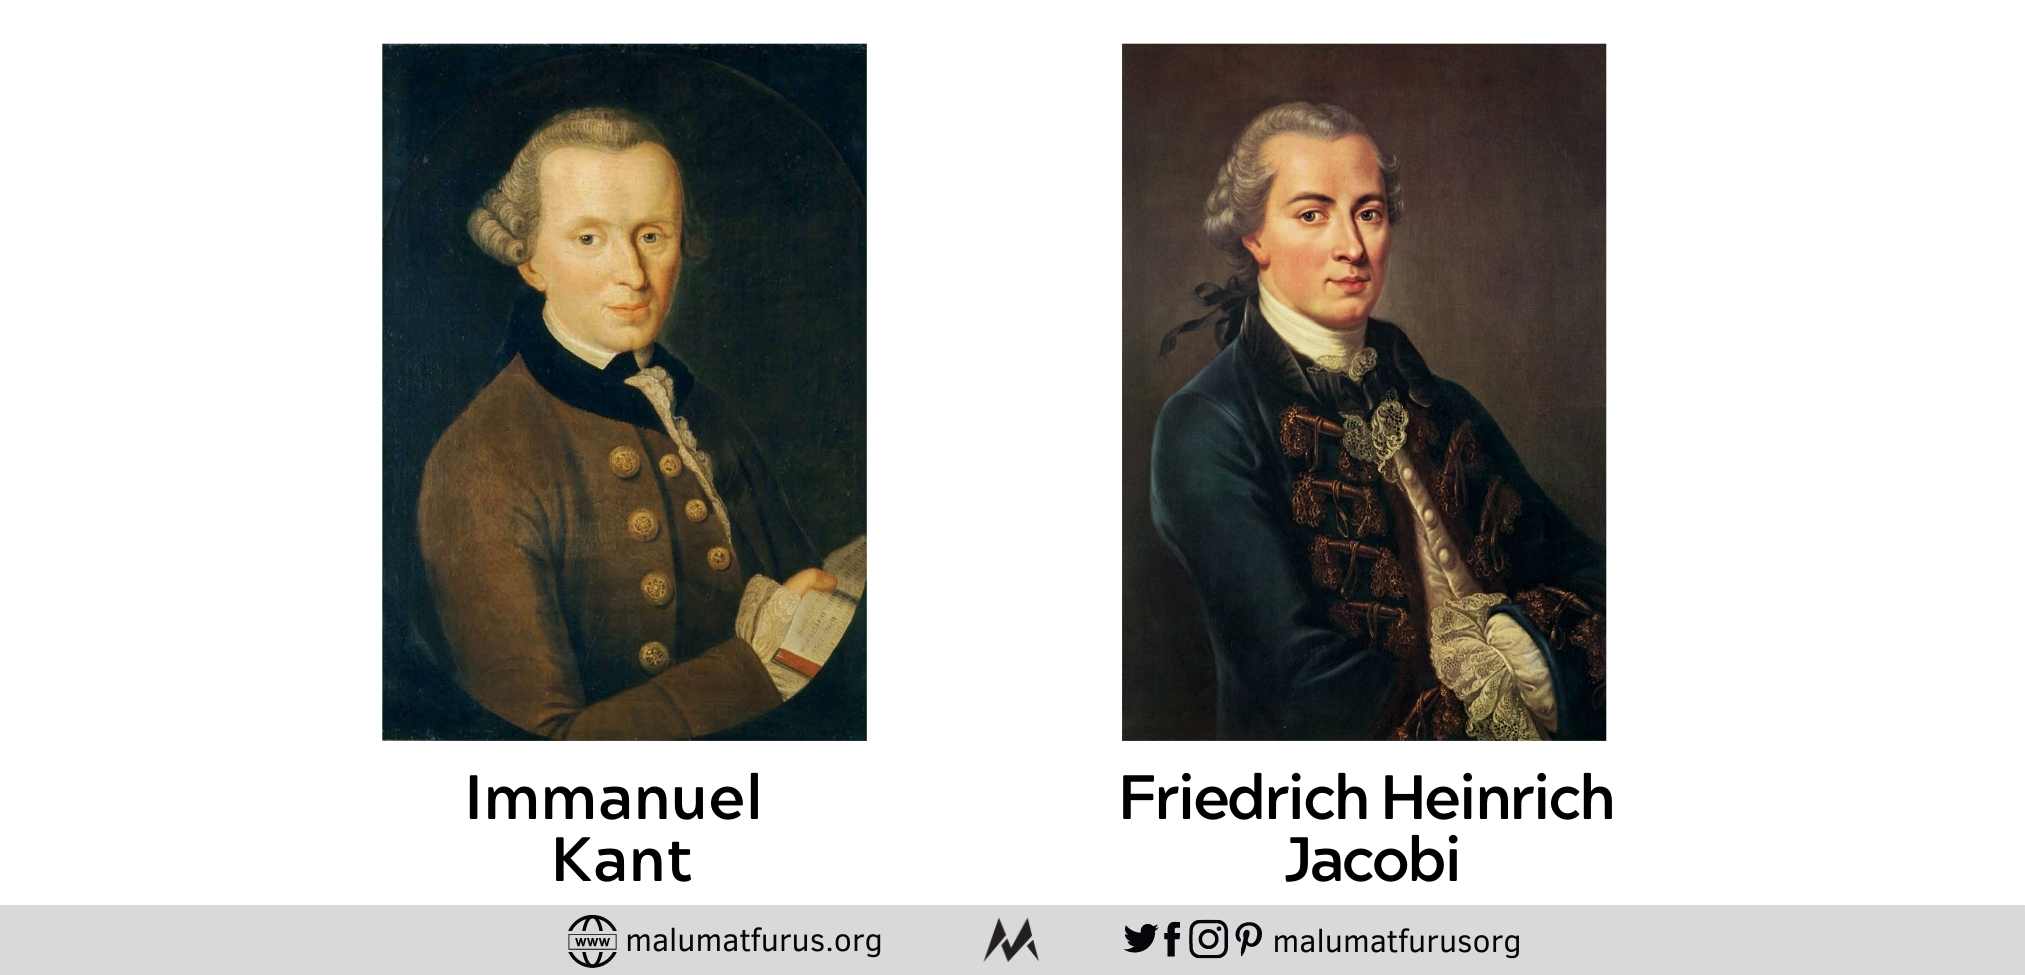 Friedrich Heinrich Jacobi Immanuel Kant